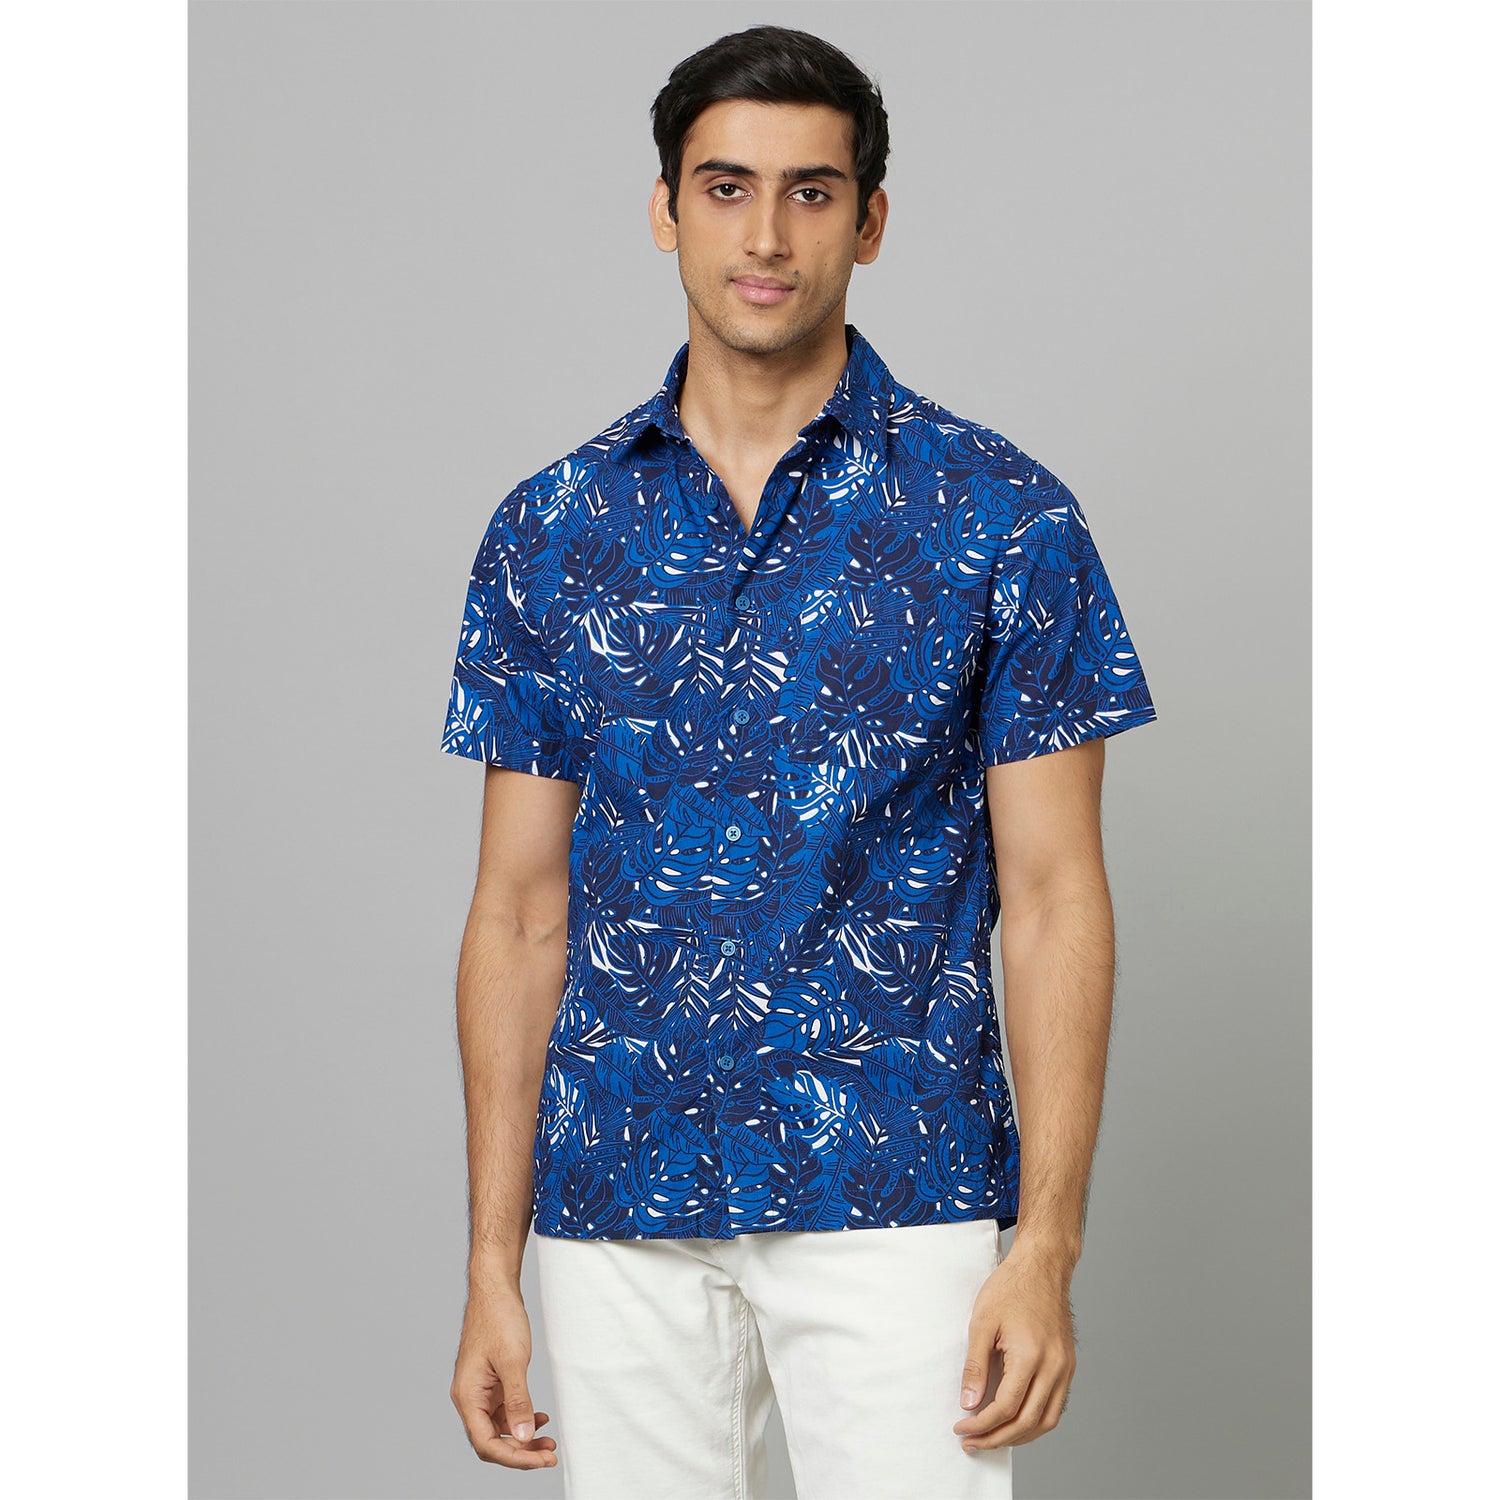 Navy Blue Spread Collar Classic Floral Printed Cotton Casual Shirt (DAPRINTI)